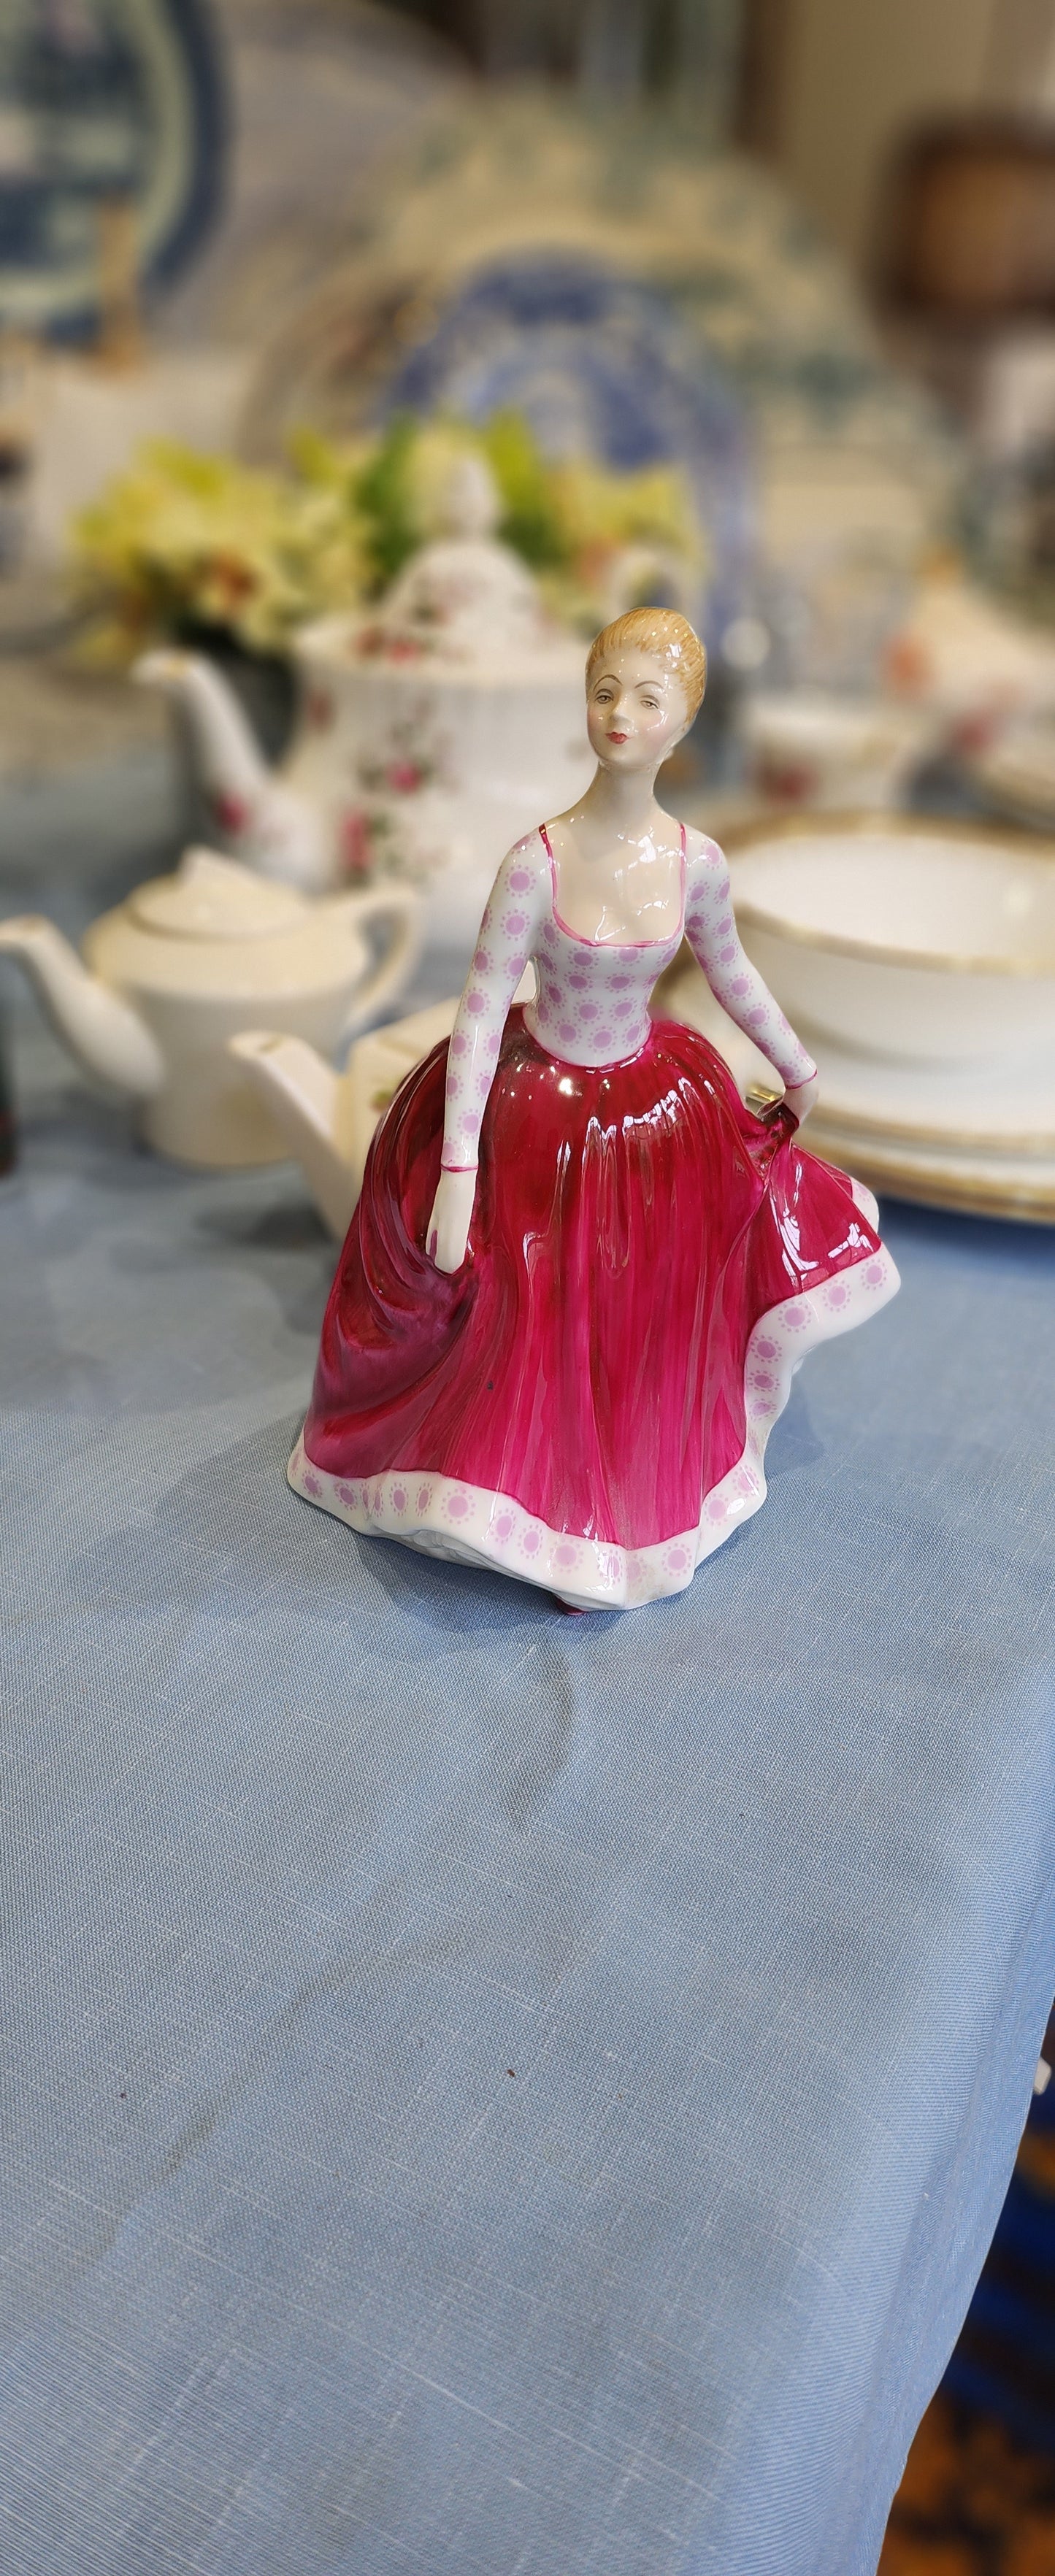 Royal Doulton Fiona figurine